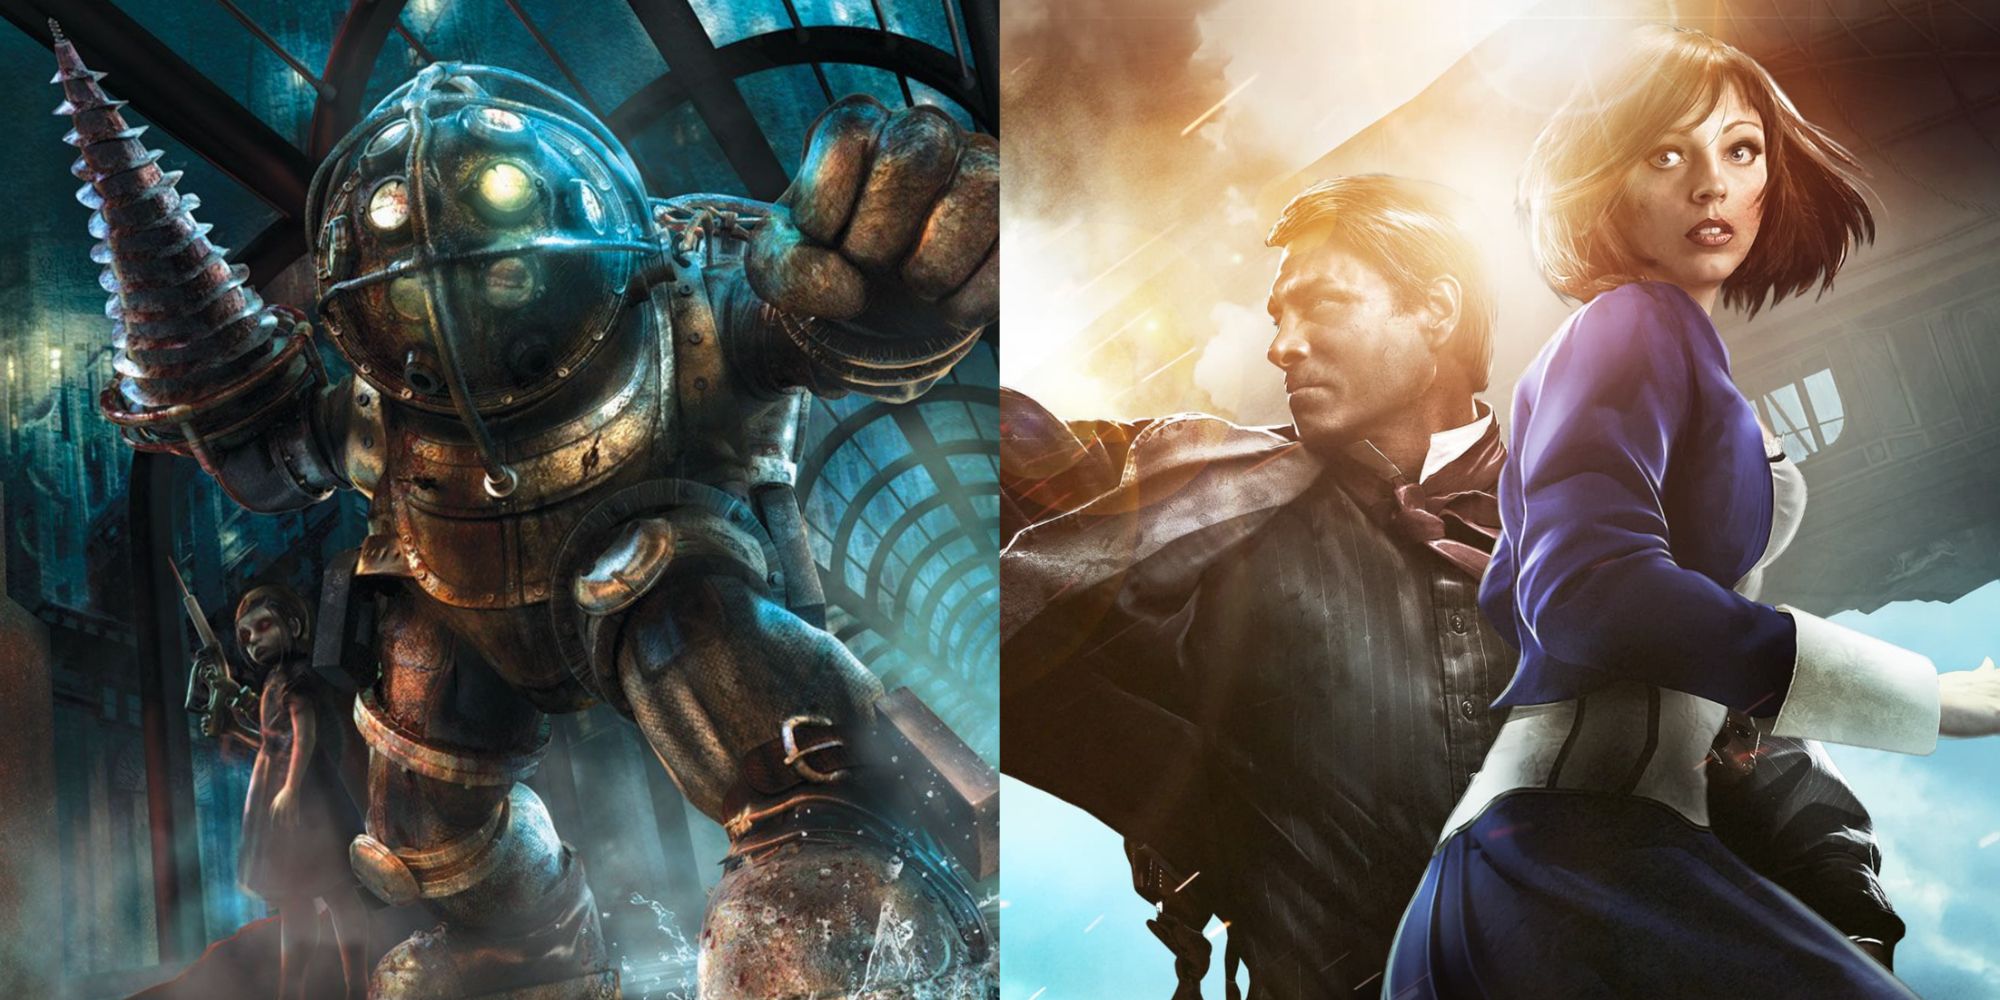 Split image of key art for both BioShock and BioShock Infinite